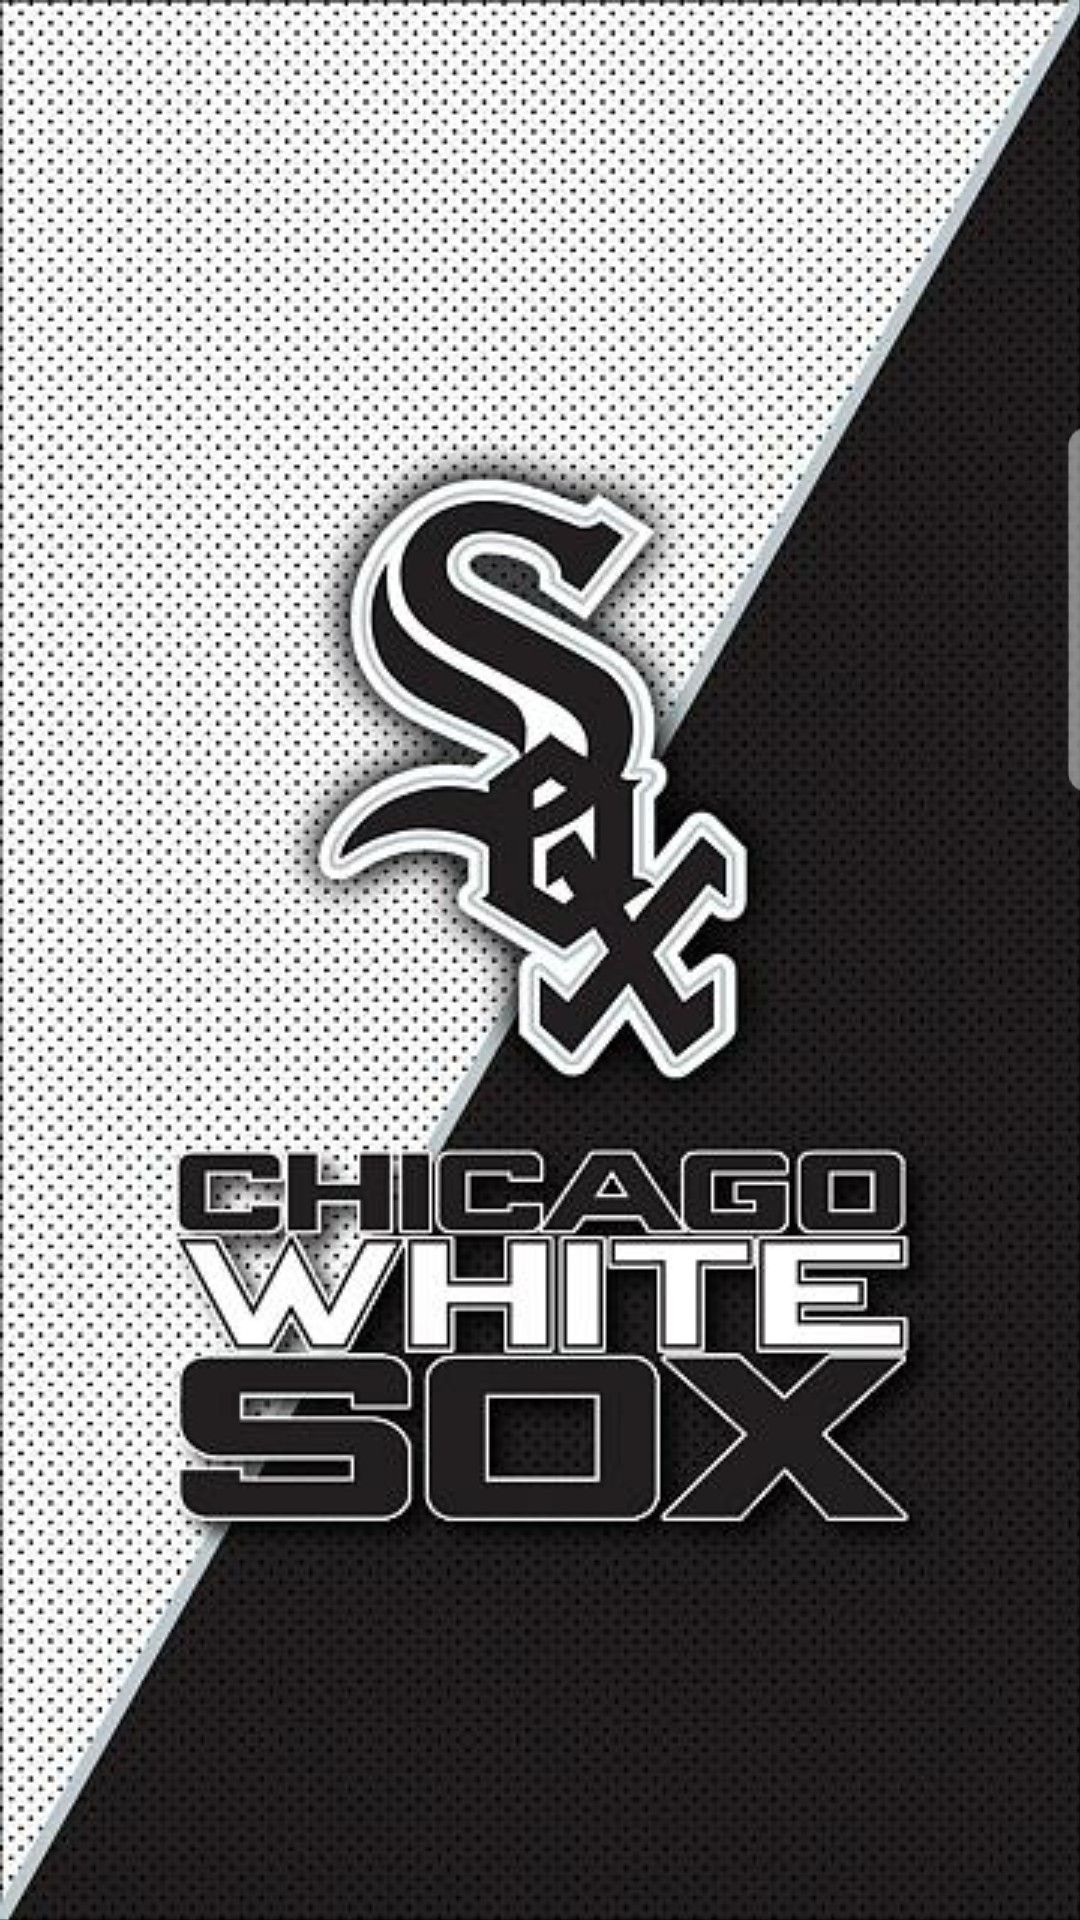 Chicago White Sox Wallpaper Iphone 1080x1920 Wallpaper Teahub Io